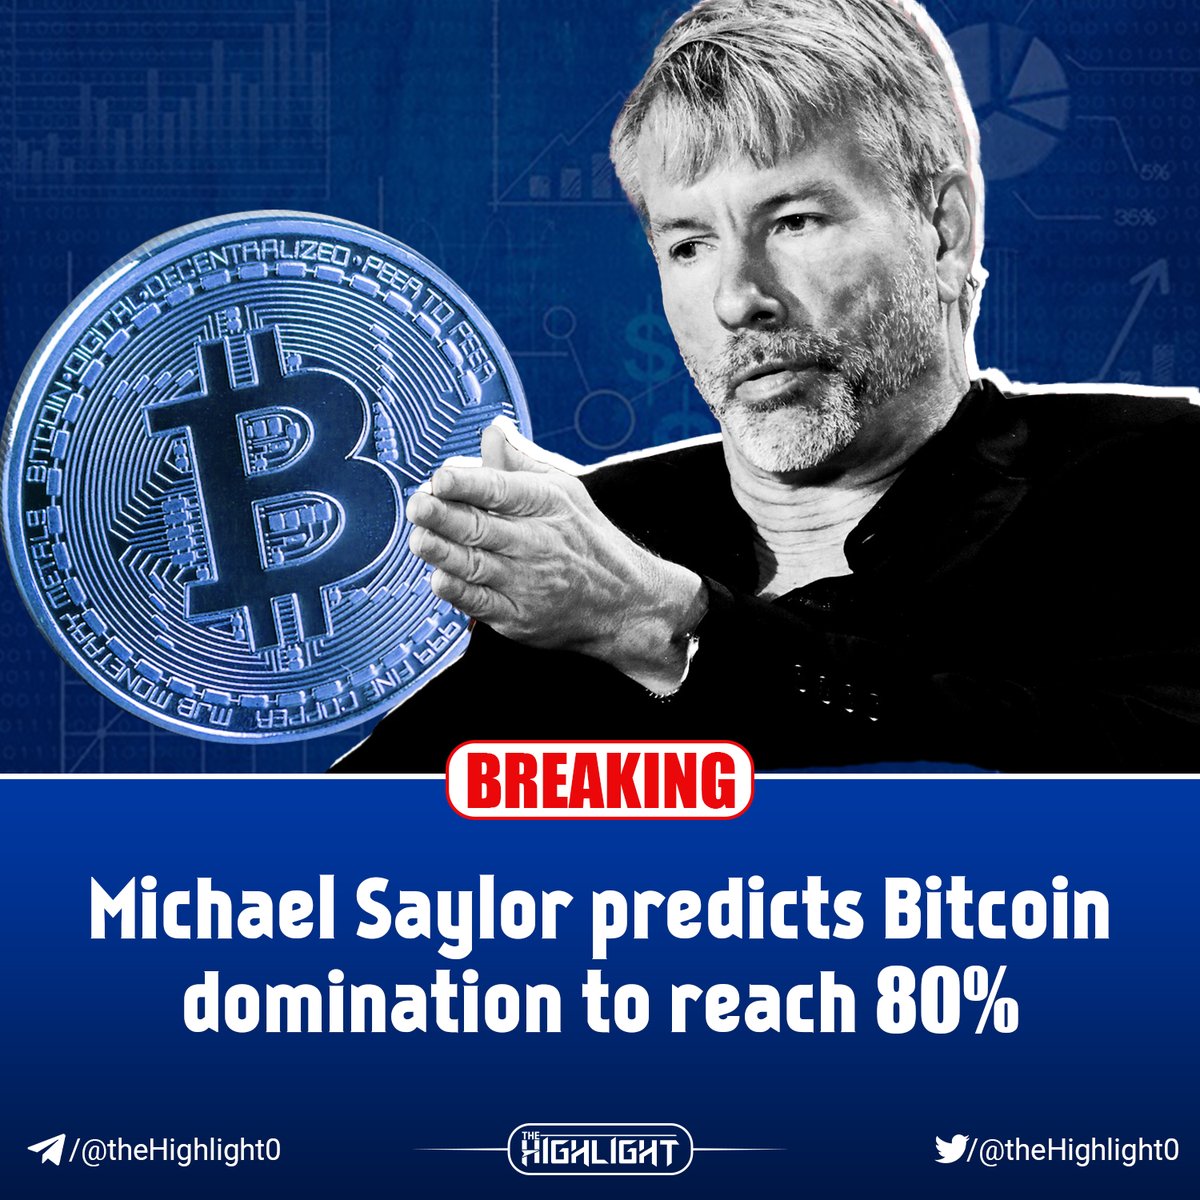 BREAKING NEWS:

Michael Saylor predicts Bitcoin domination to reach 80%

#CryptoNews $BTC #MichaelSaylor #Domination #Bitcoin